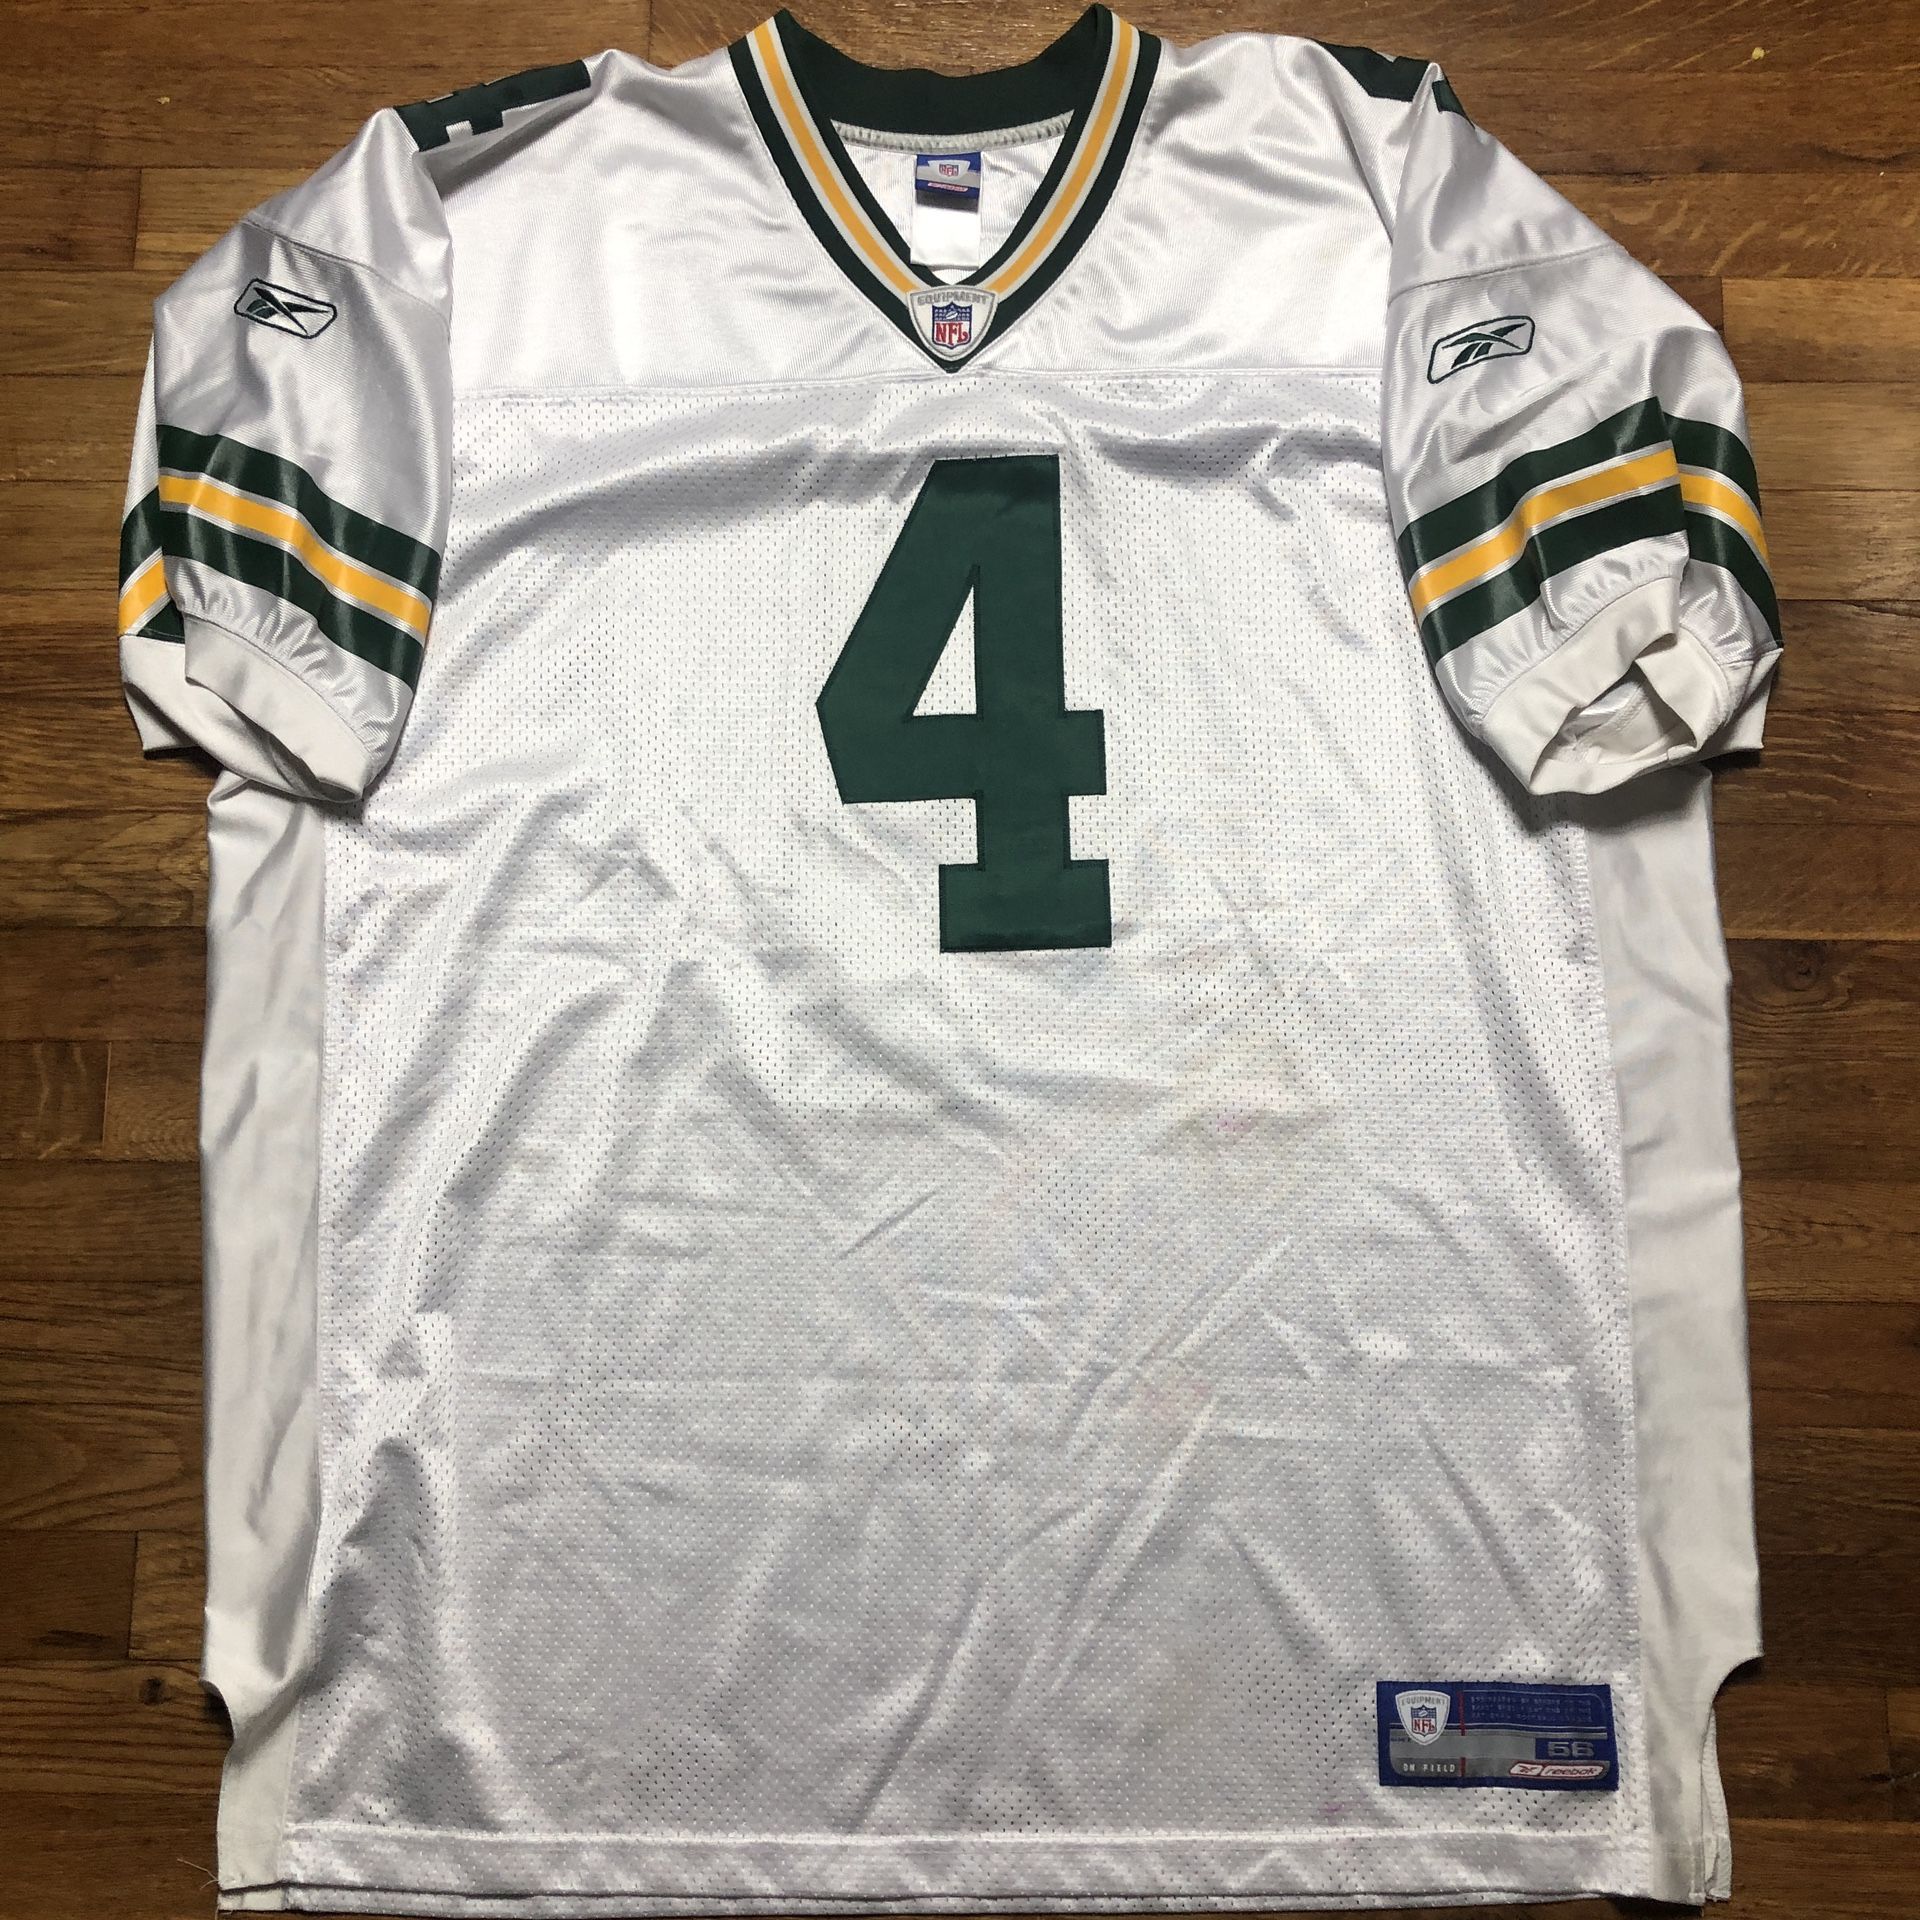 Brett Favre Green Bay Packers Authentic NFL Reebok Vintage Retro Throwback Jersey 56 3XL